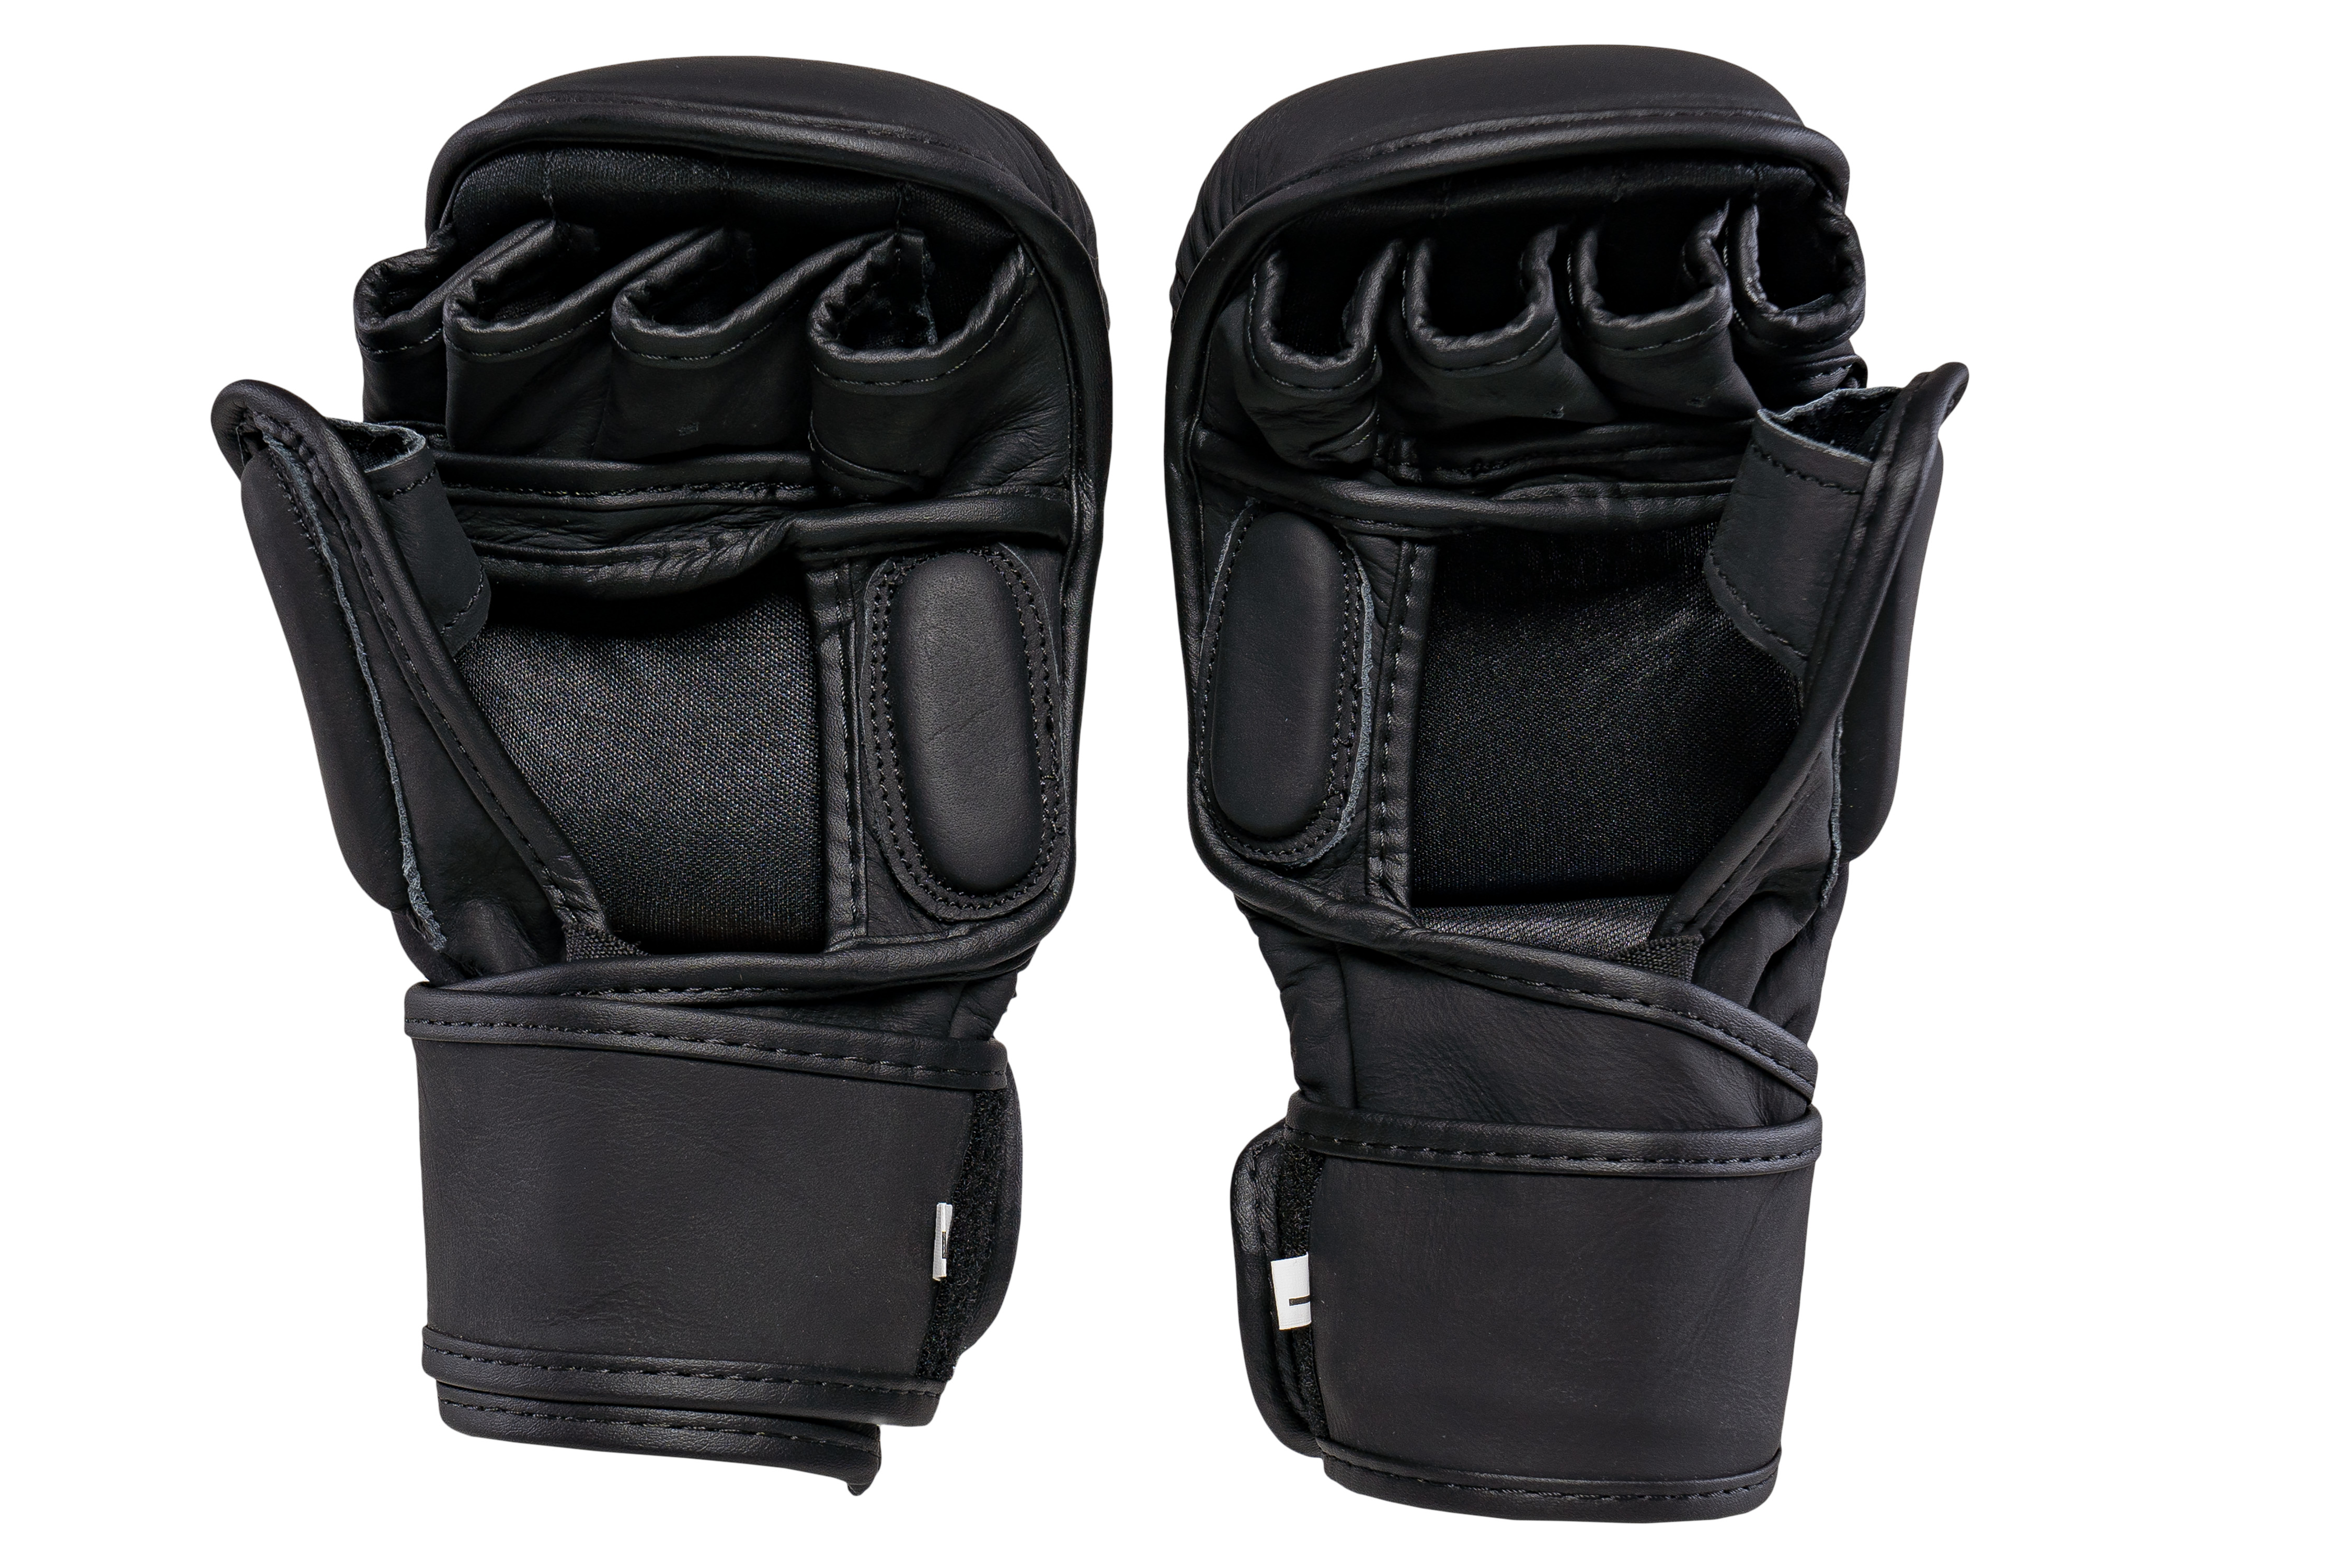 Okami Fightgear MMA Hi-Pro Sparring Gloves Blanc